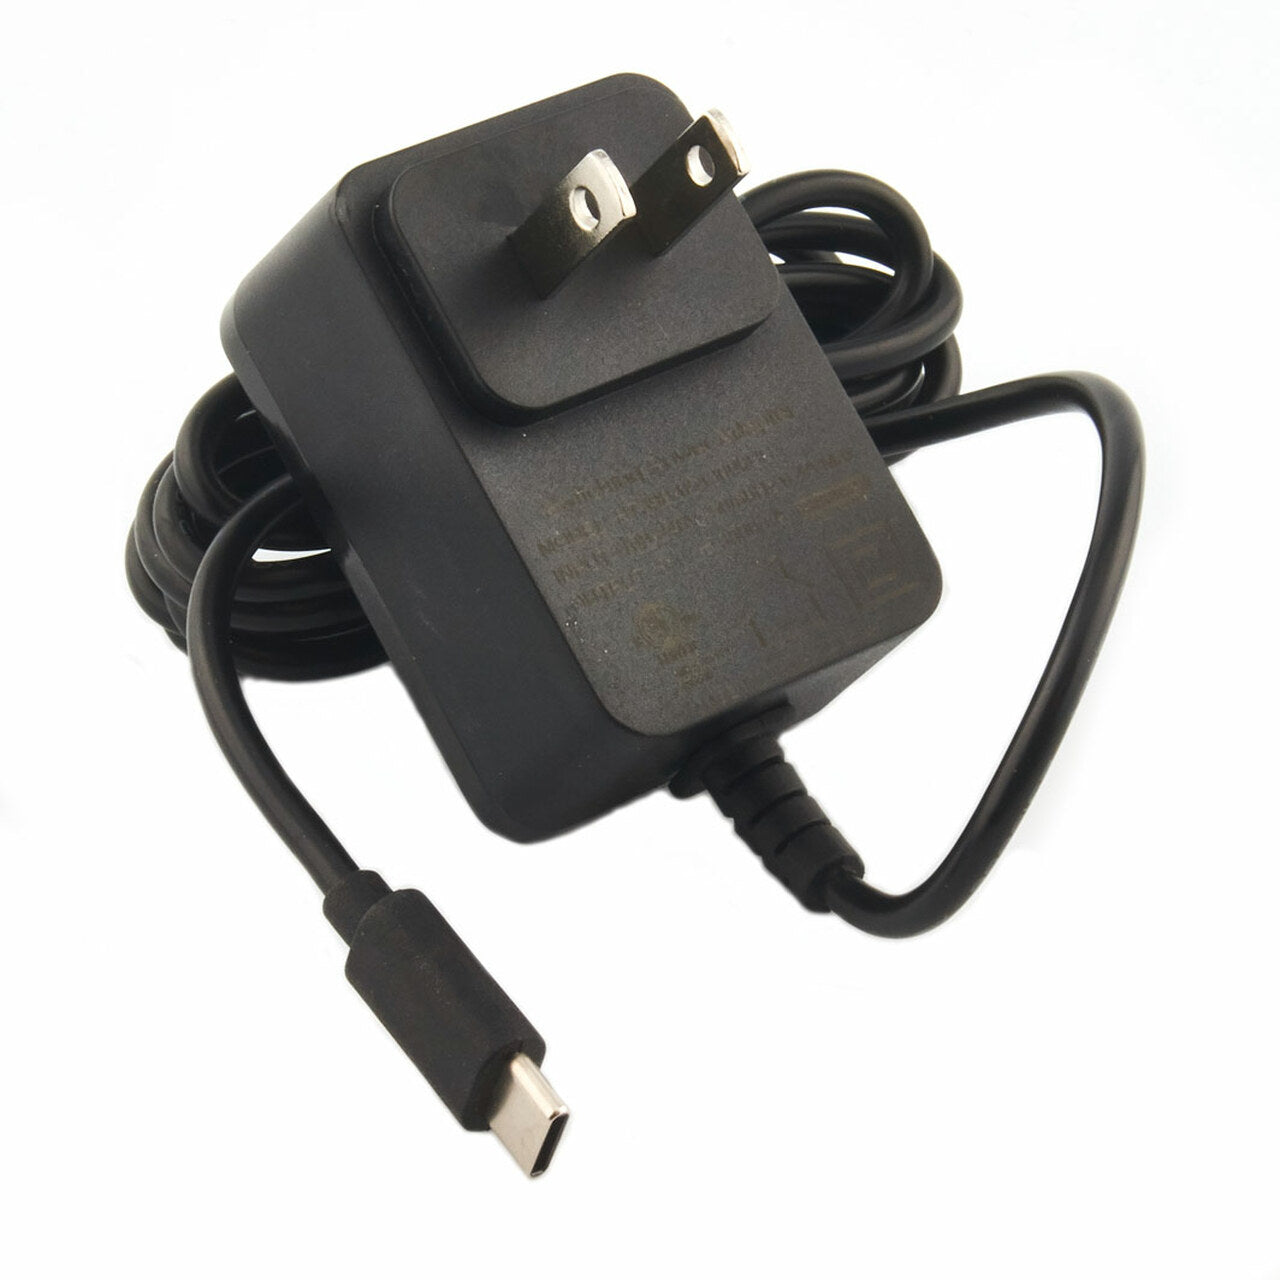 Regleta  PowerCube BXPC1400 Gris, 4 tomas + USB, alargo